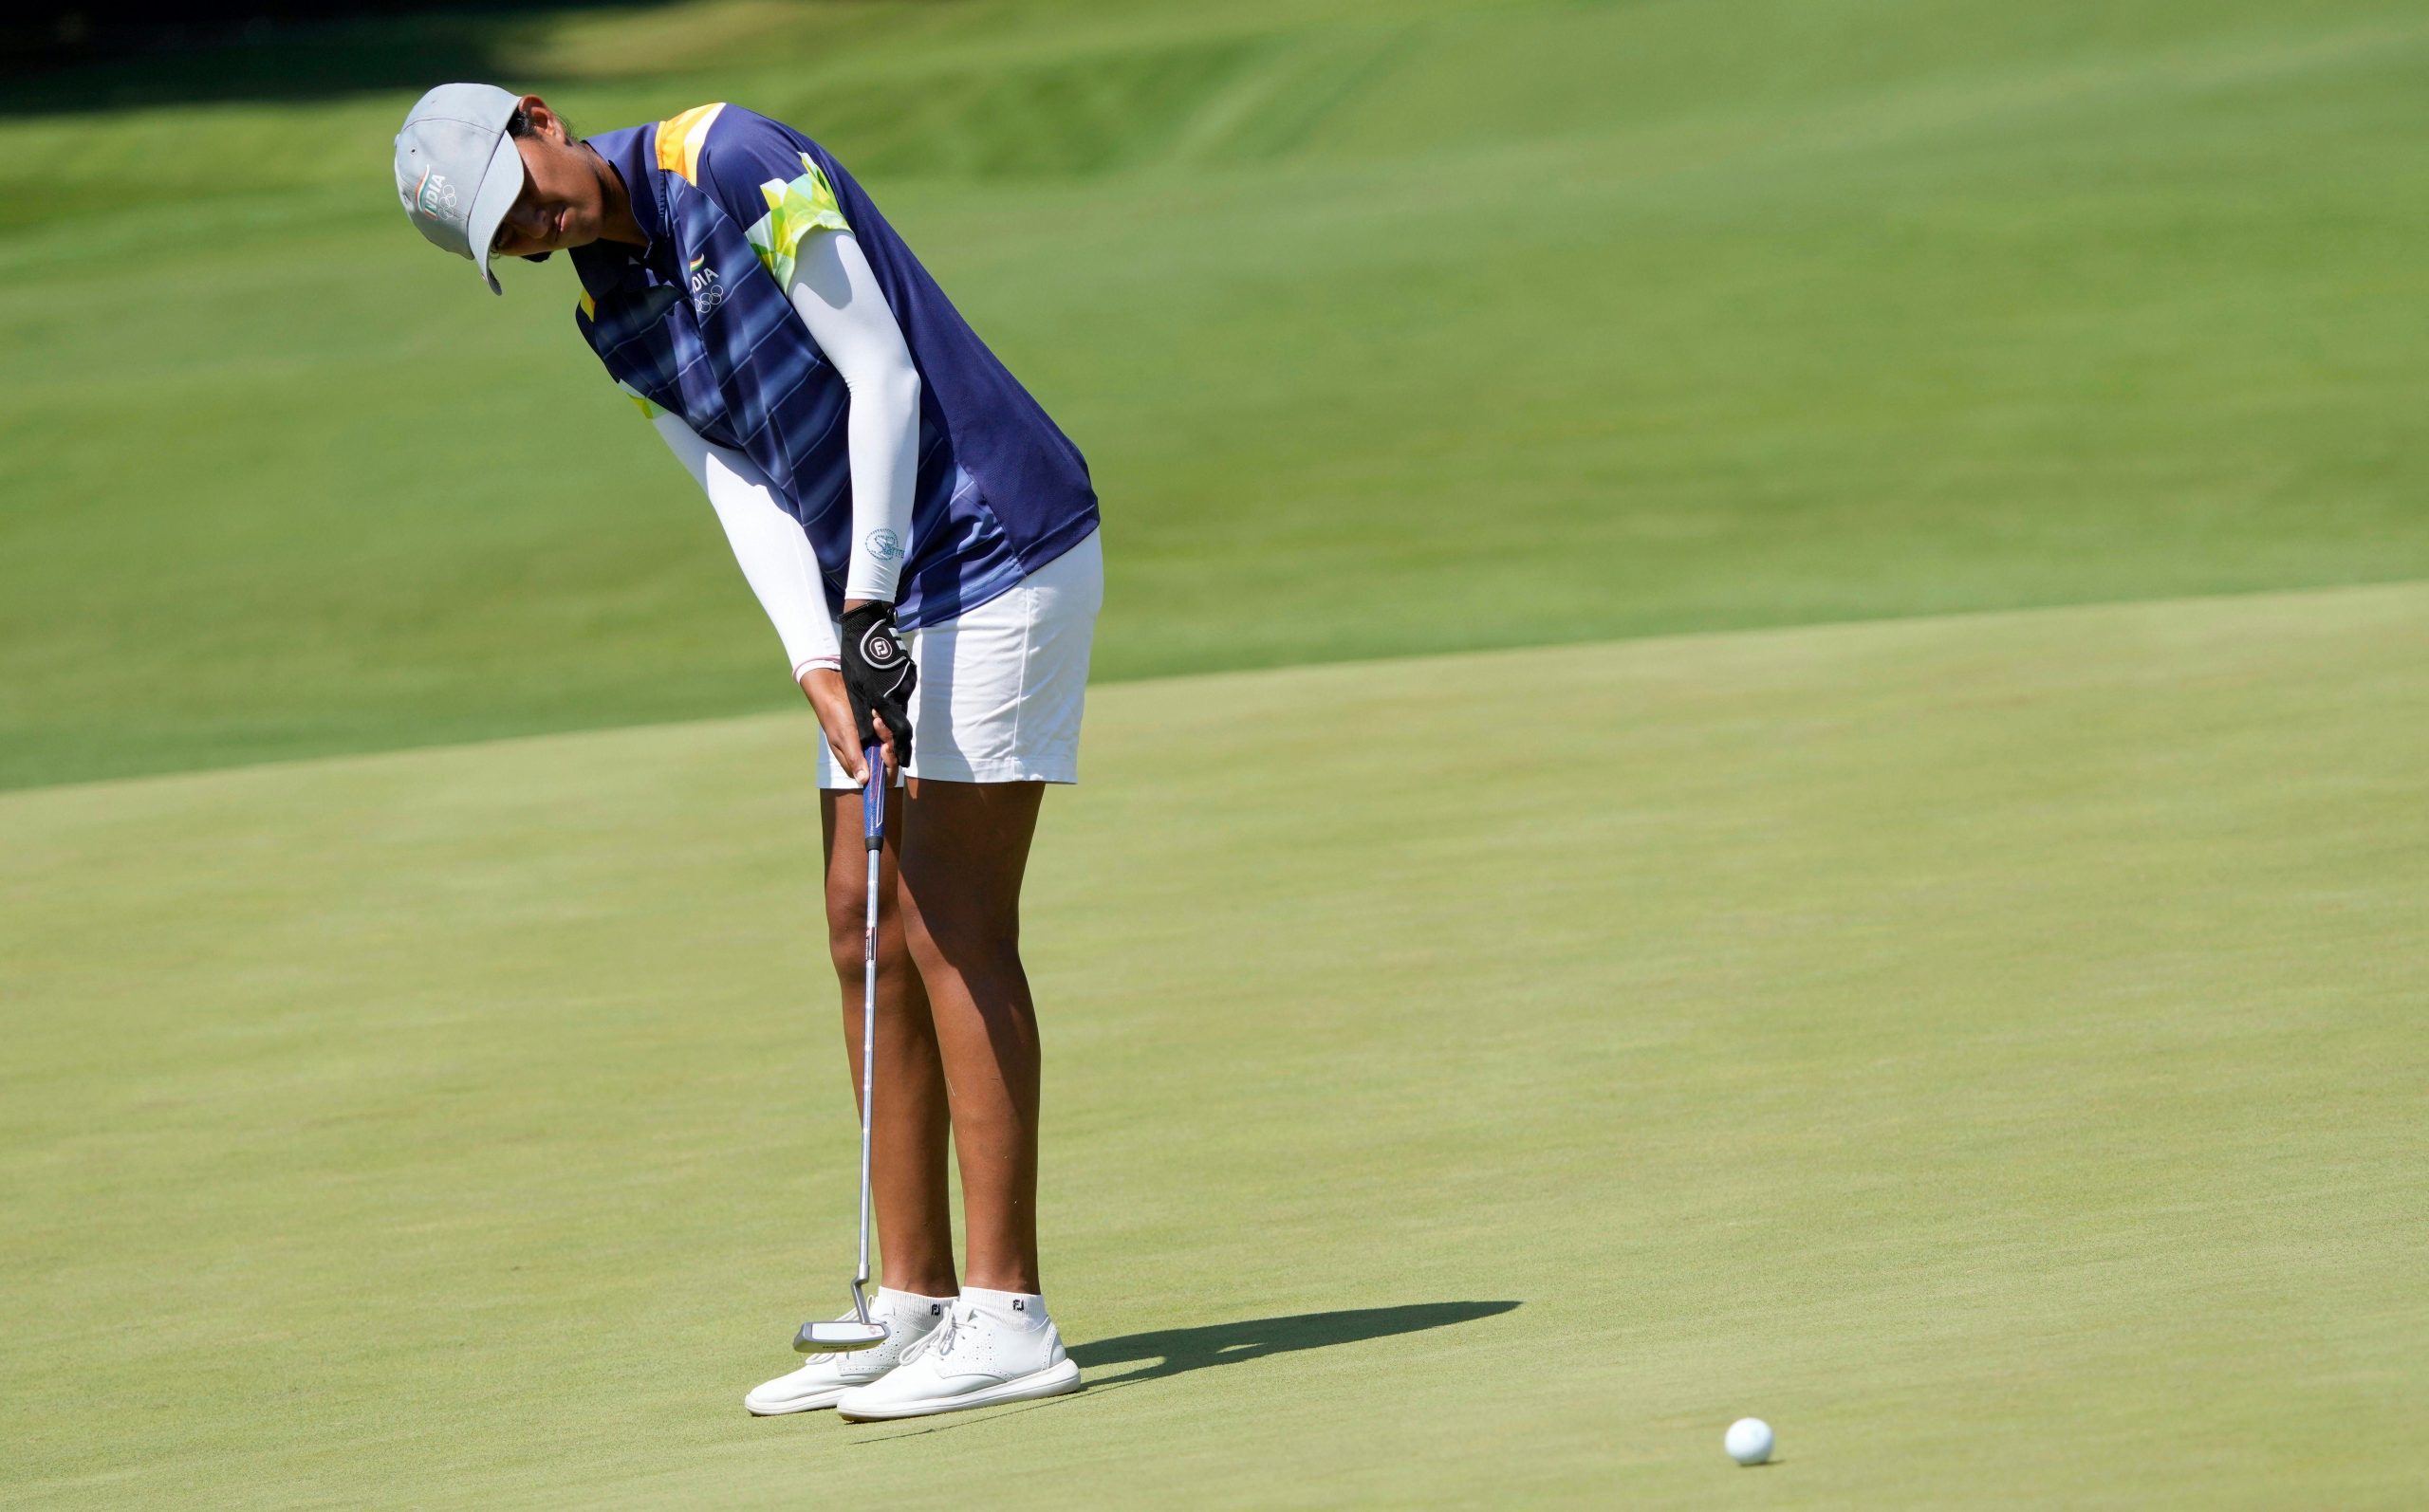 Indian golfers Aditi Ashok, Tvesa Malik off to rough starts at Scottish Open